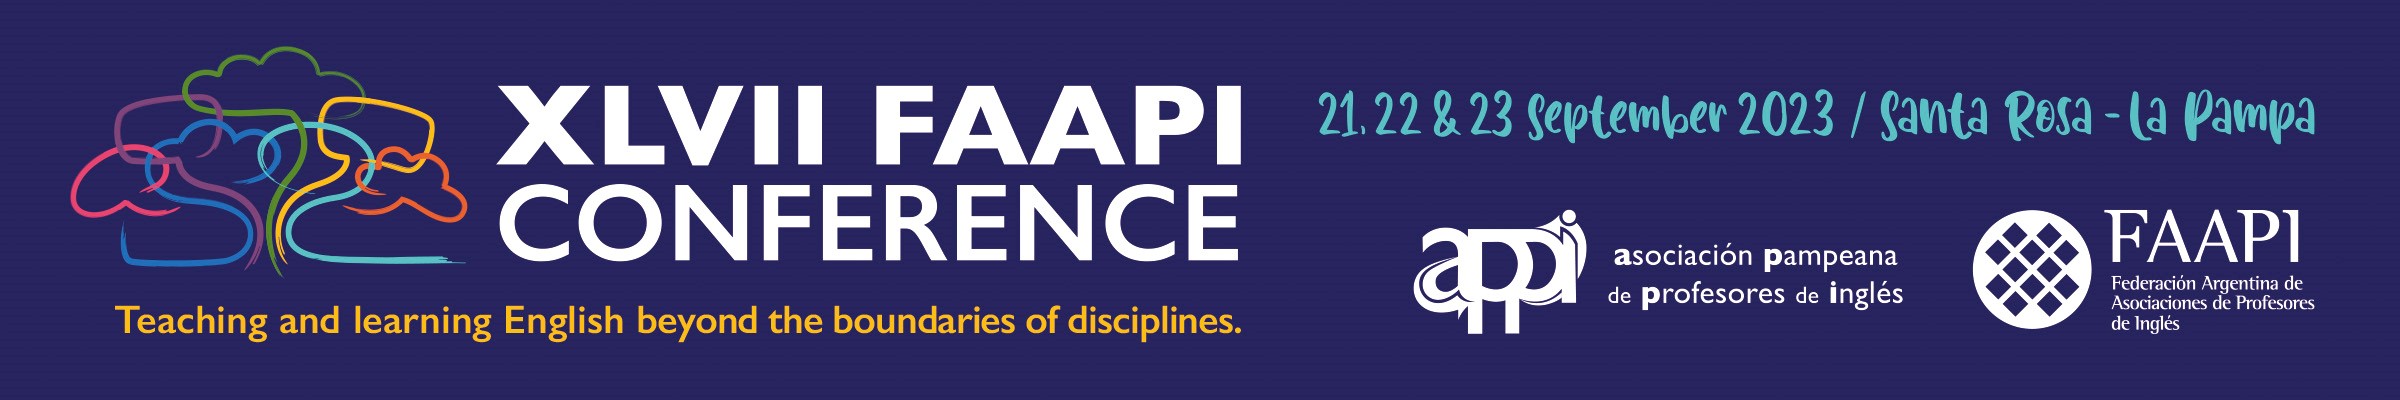 XLVII FAAPI Conference 2023